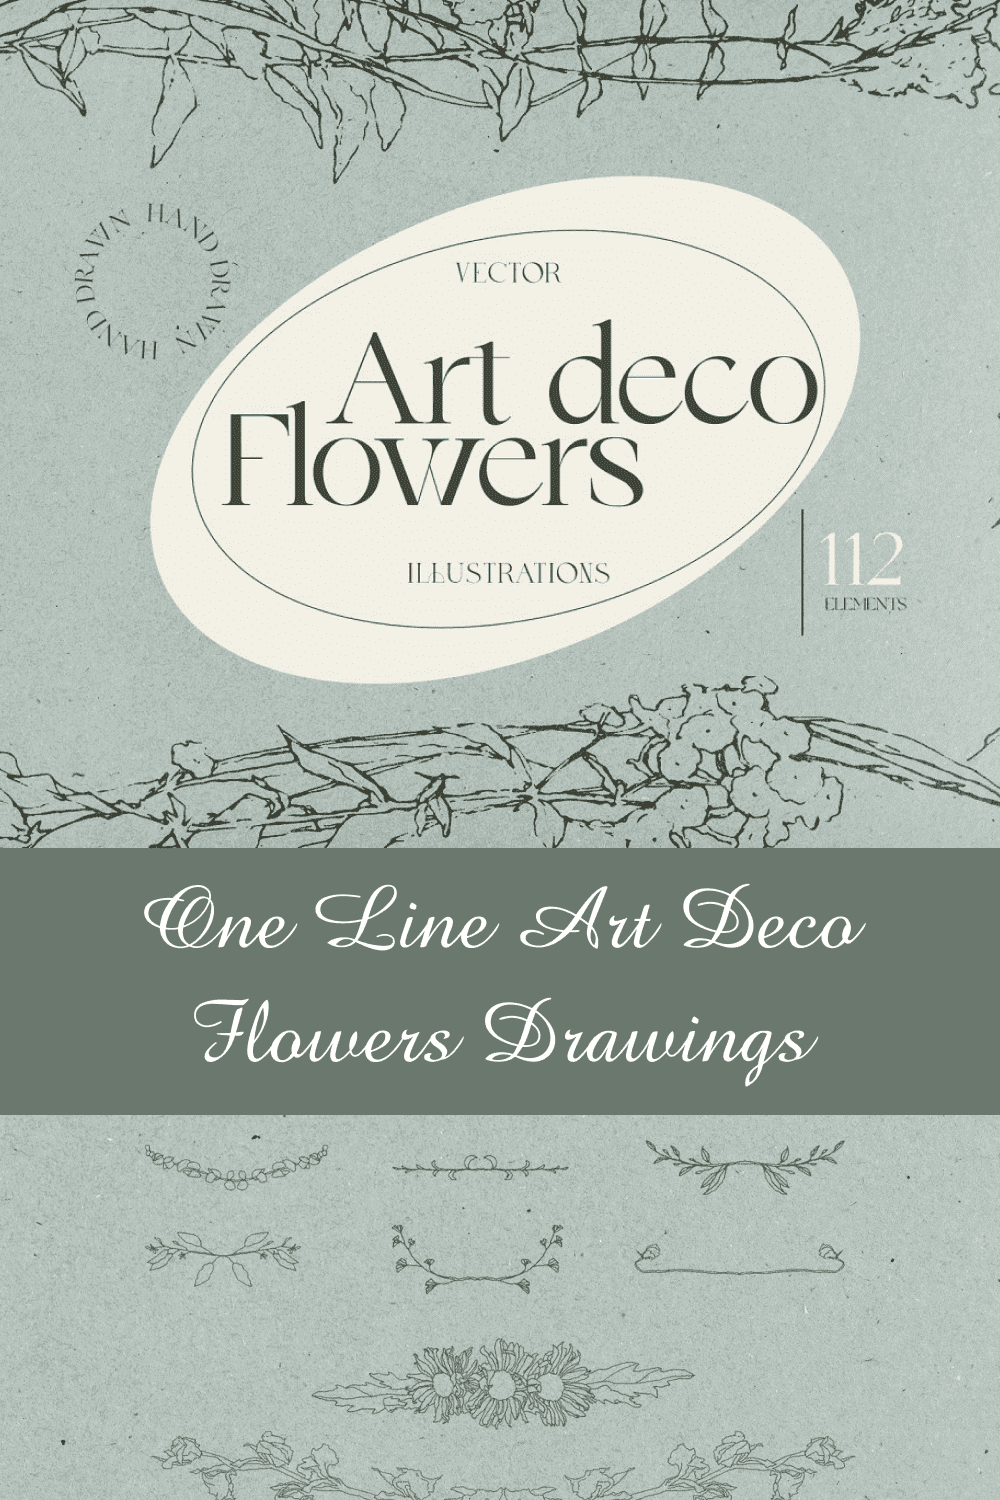 one line art deco flowers drawings pinterest image.